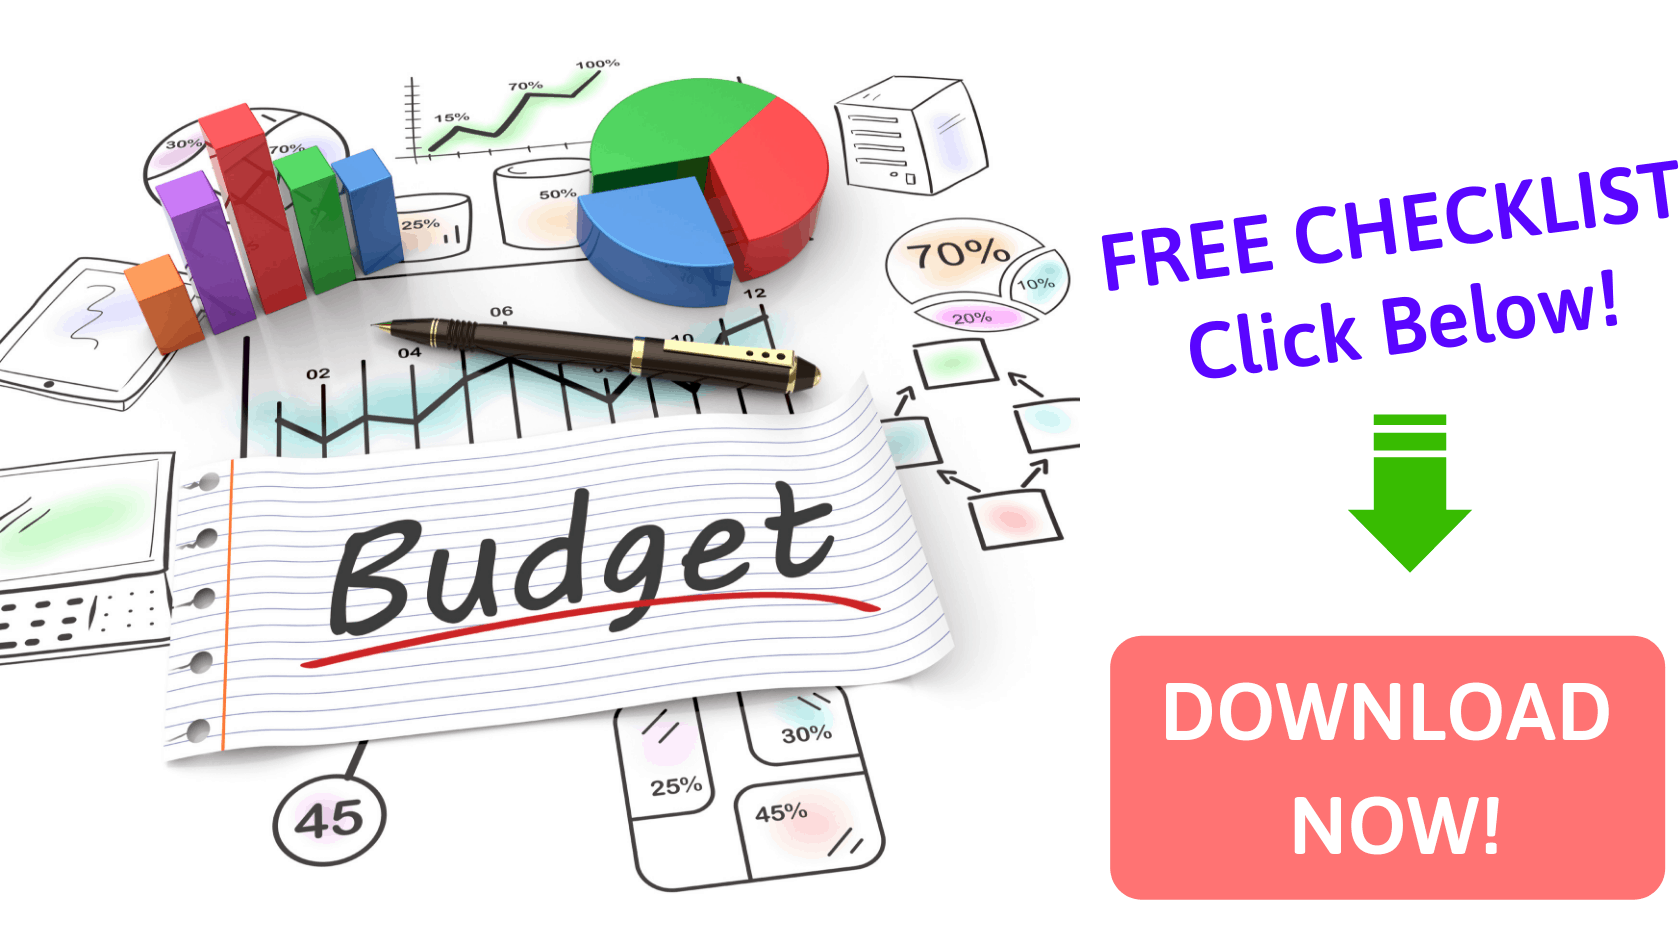 Landing Page Image - Free Budget Checklist